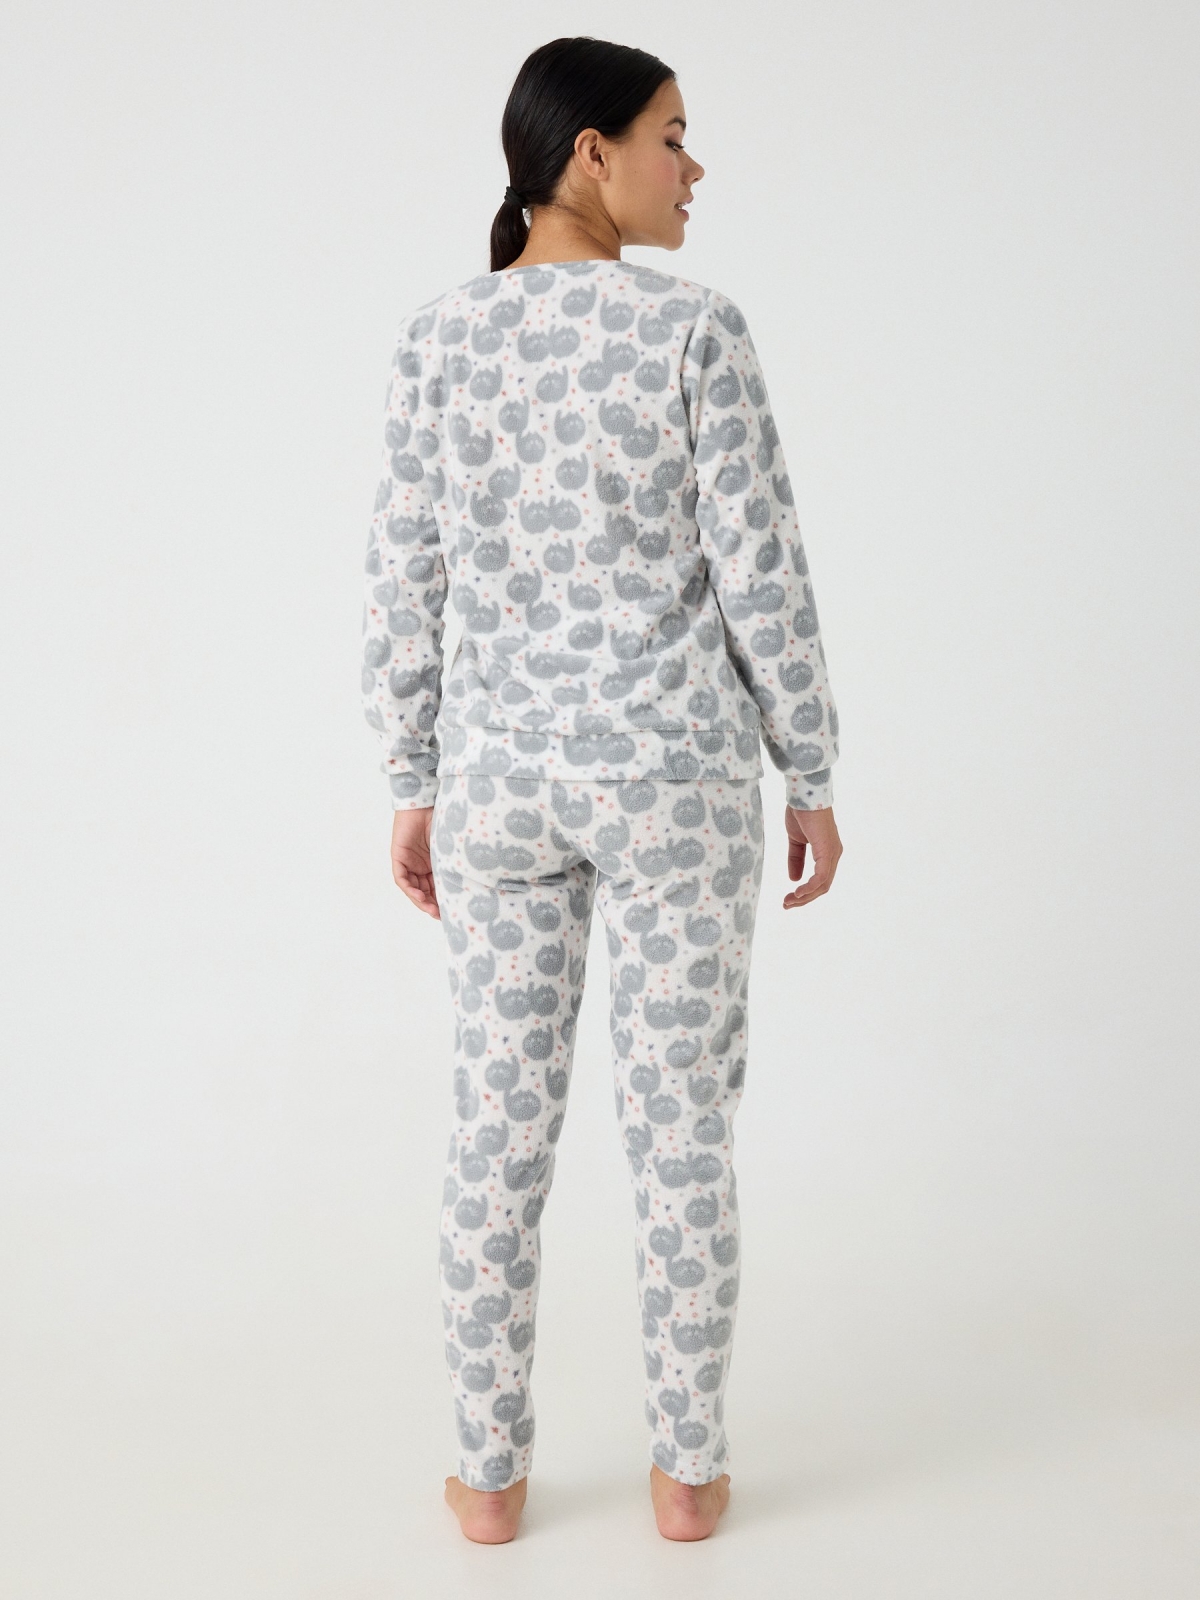 Pijama polar estampado blanco vista media trasera